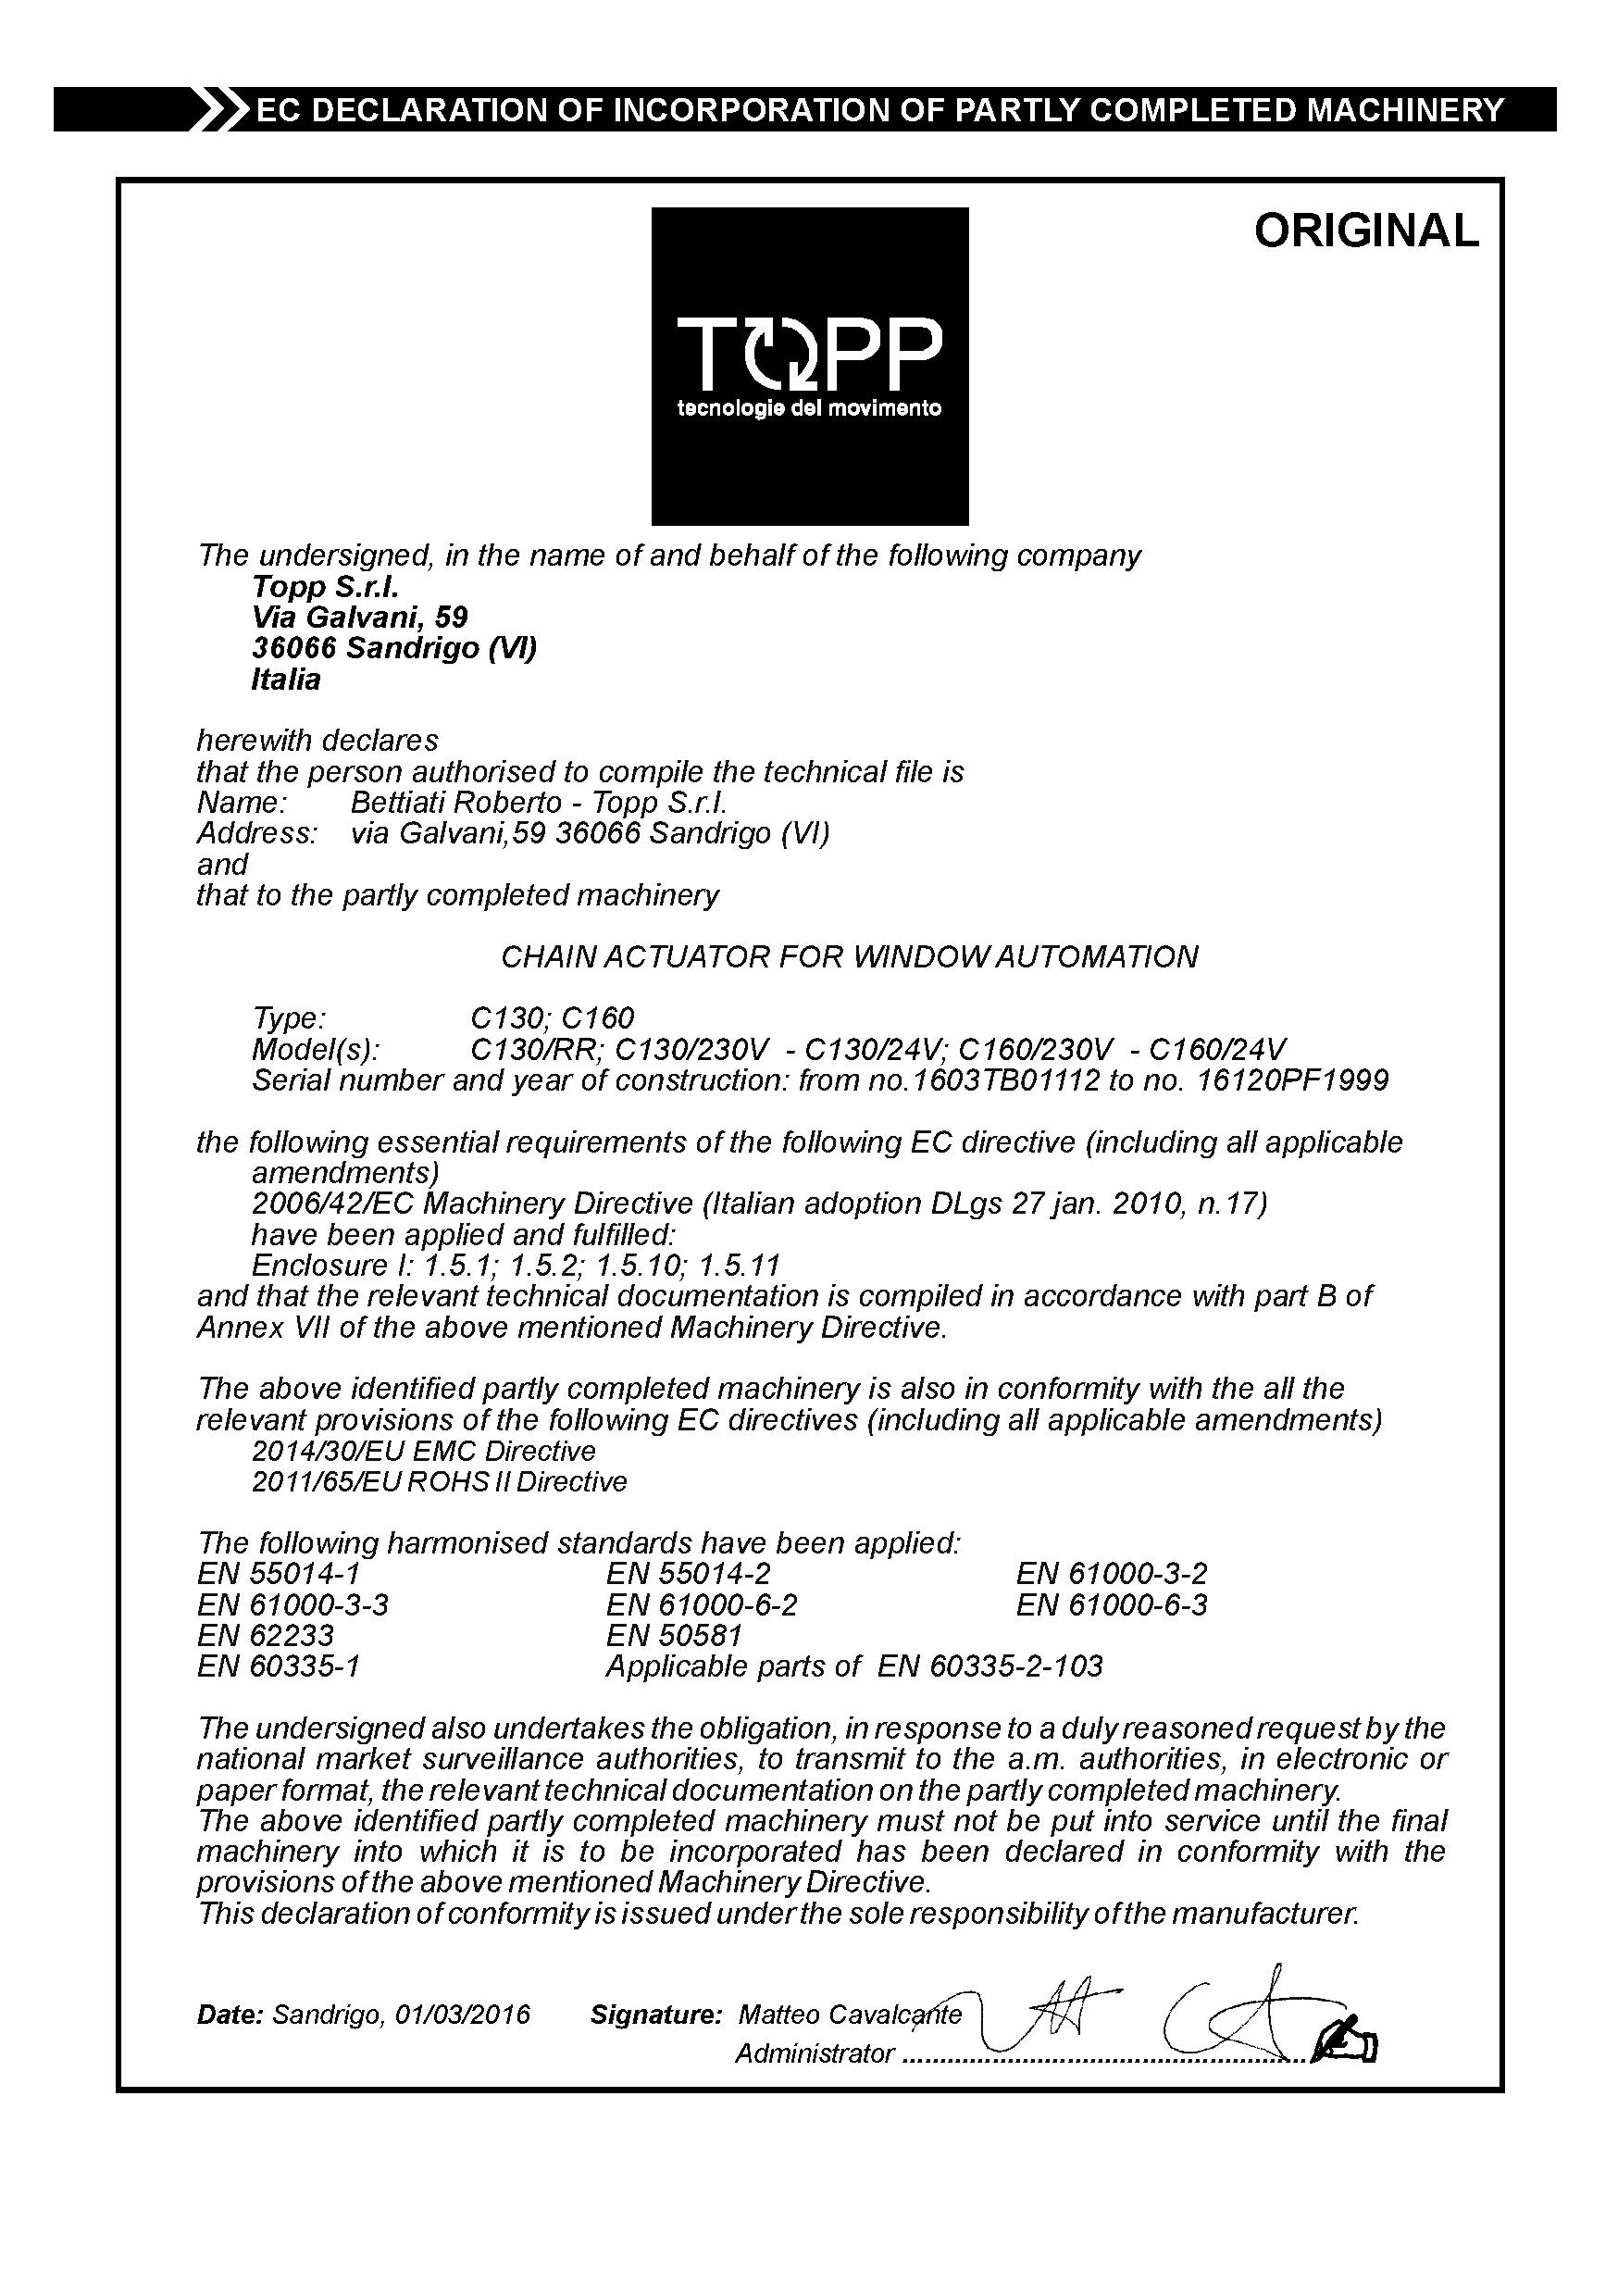 C130 certifications